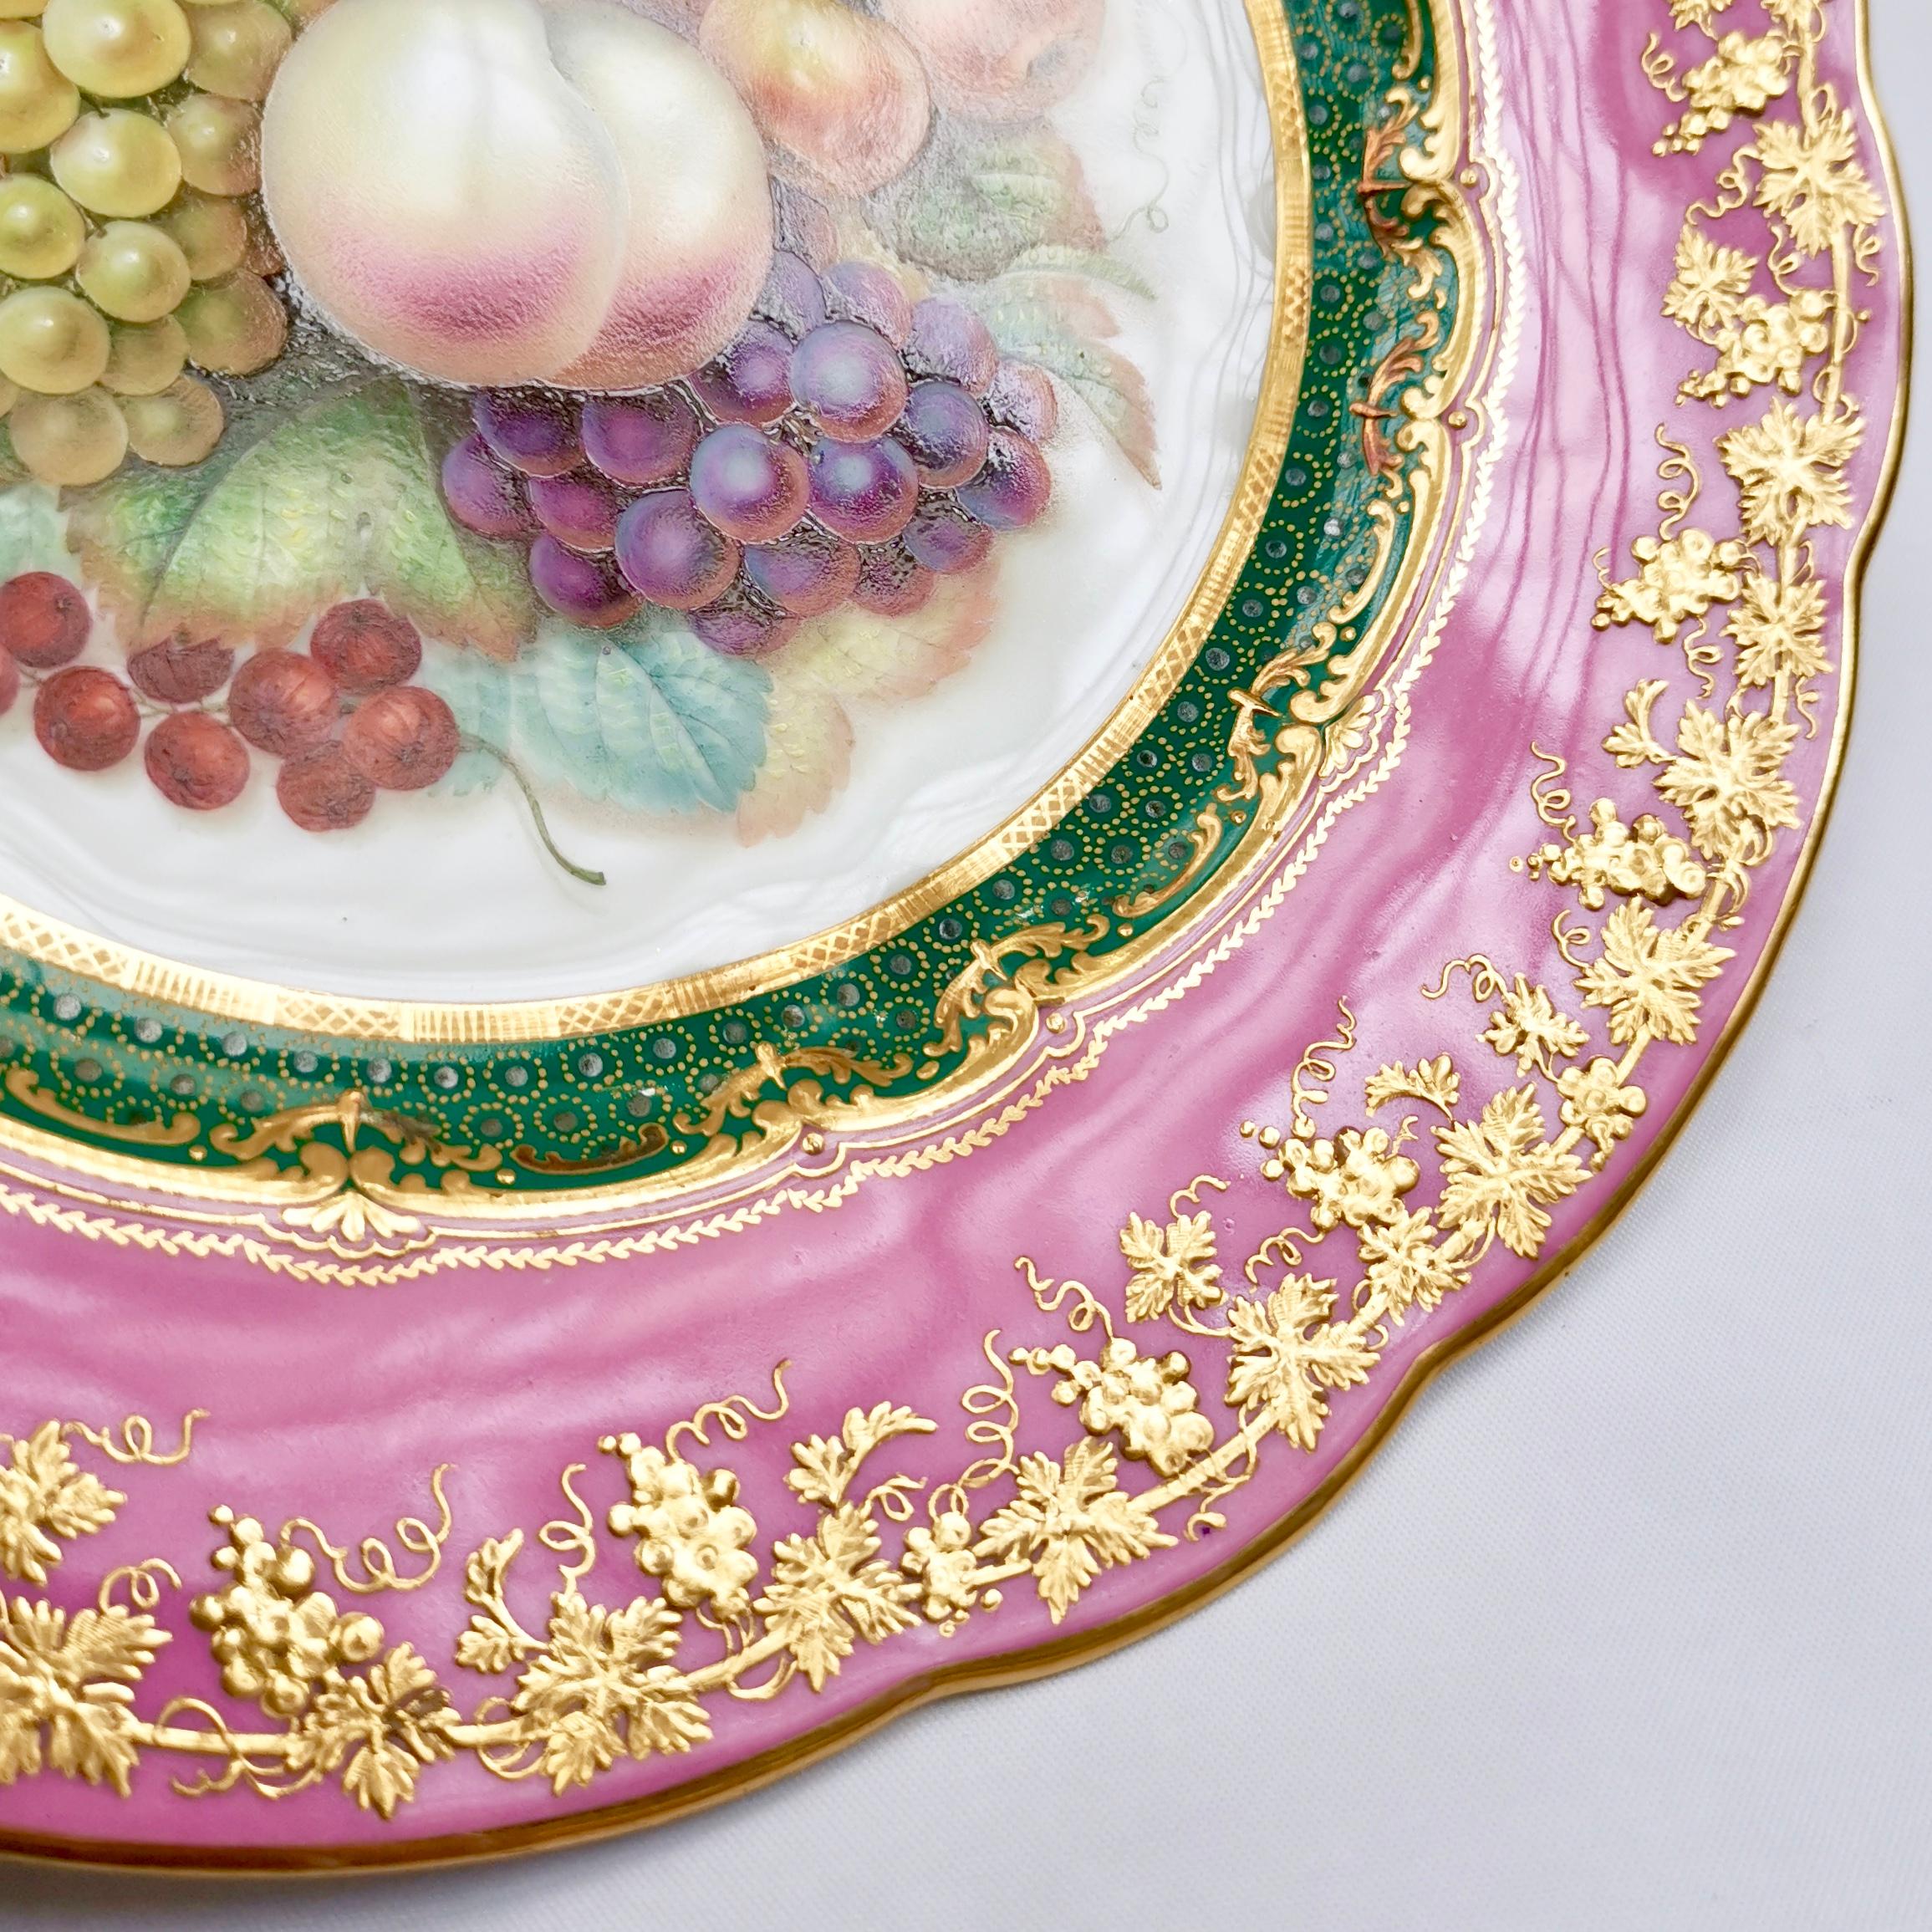 Victorian Coalport Porcelain Plate, Rose du Barry Pink, Fruits by Jabey Aston, circa 1870